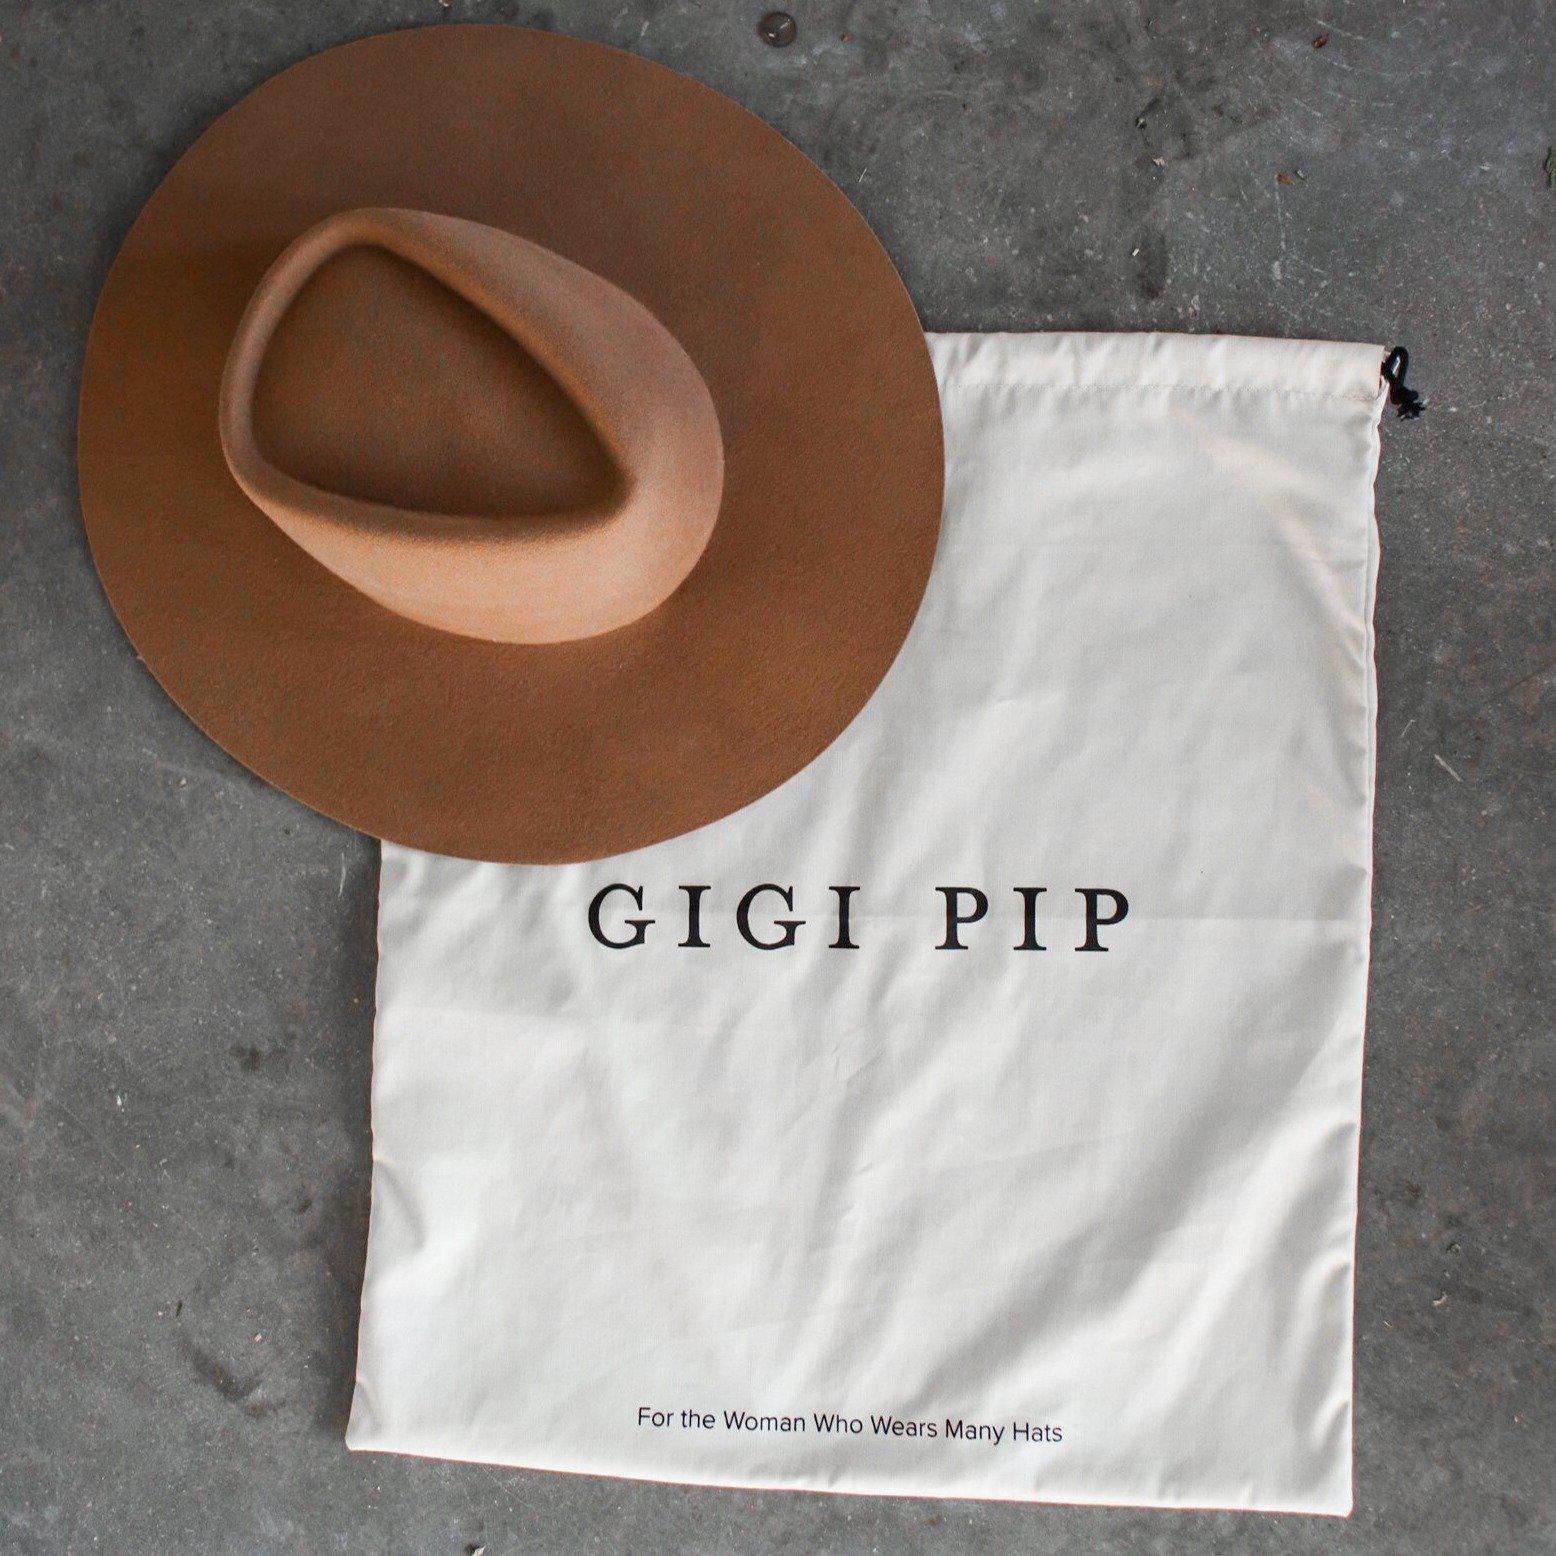 Gigi Pip hat care products - Hat Keepsake Bag - cotton drawstring duster bag for hat storage, featuring the Gigi Pip brand [white]